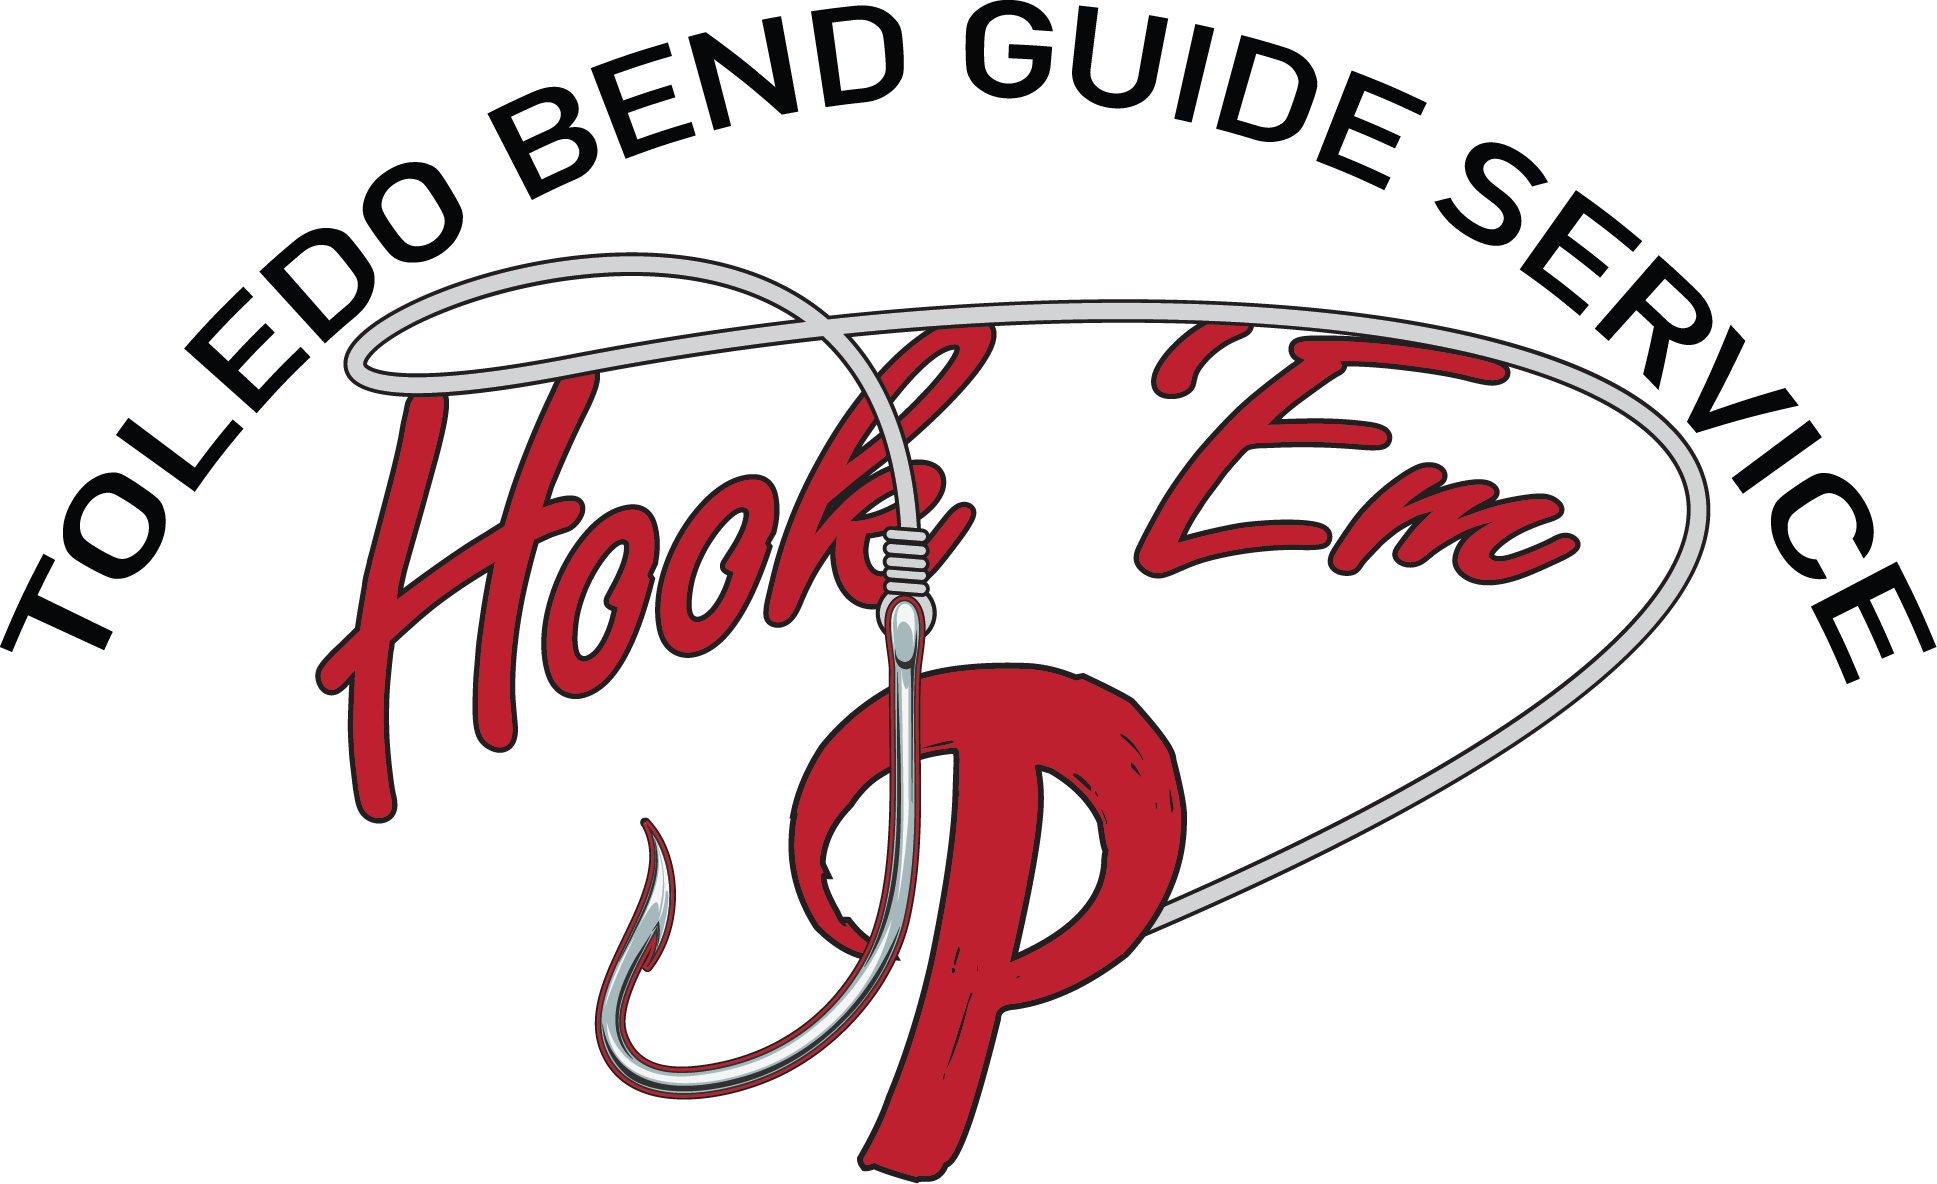 Toledo Bend Guide Service 